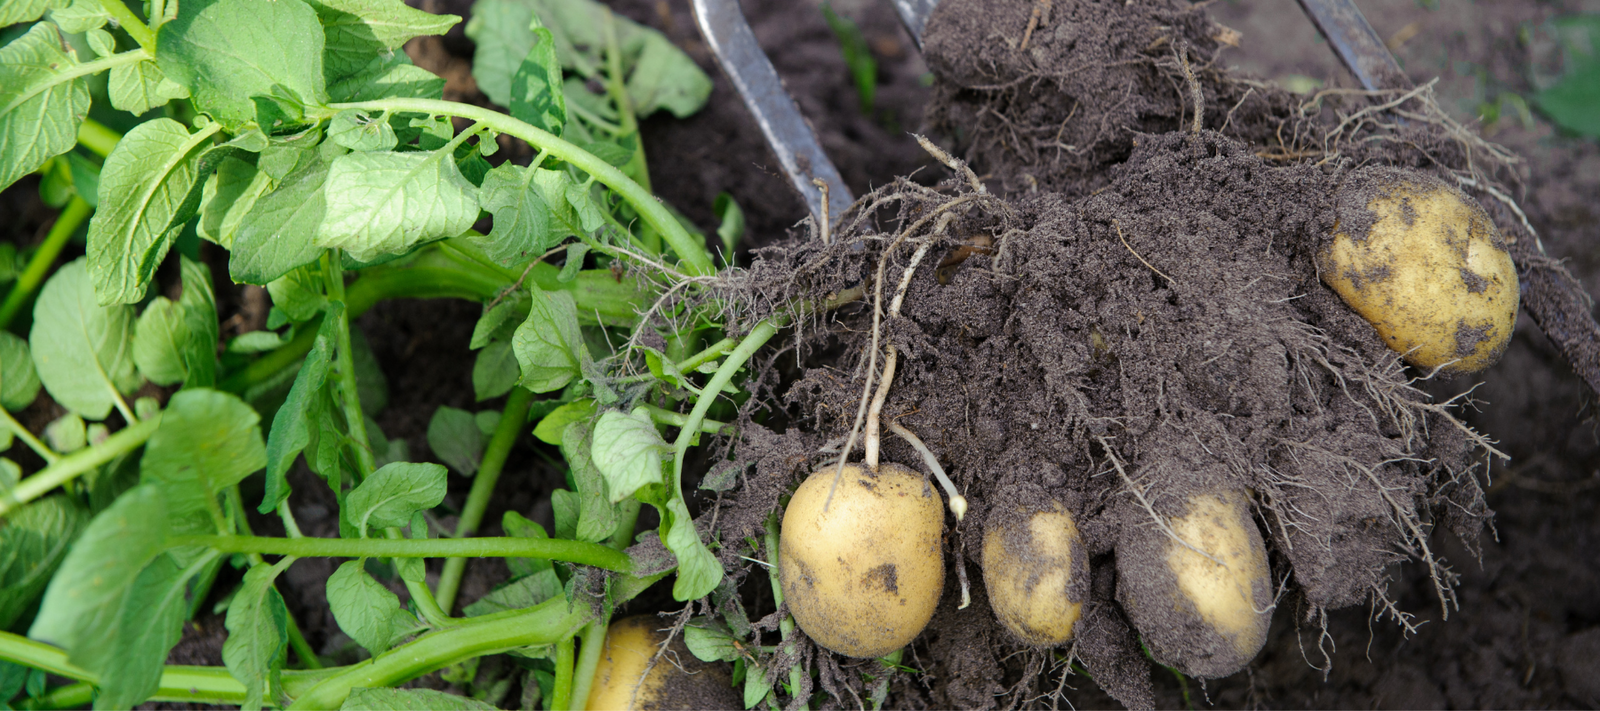 Image of Potatoes plant